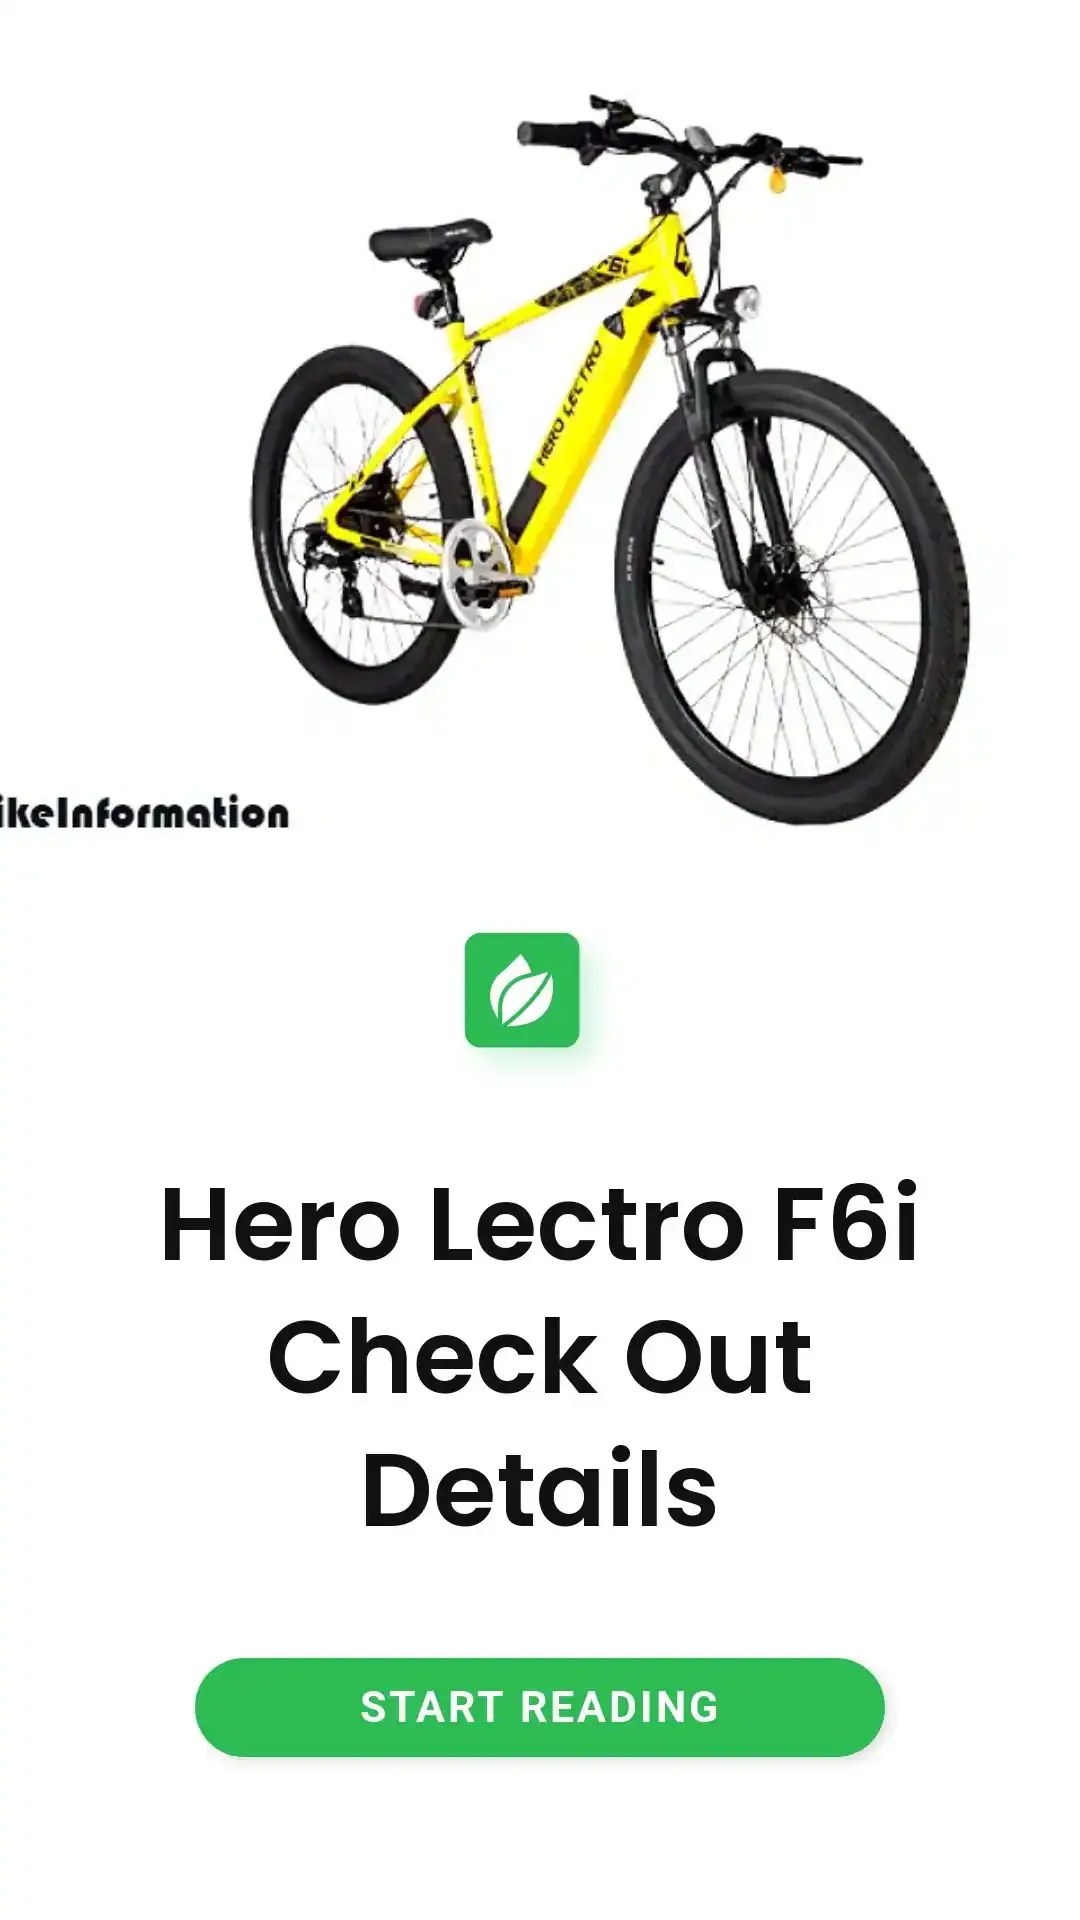 Hero Lectro F6i